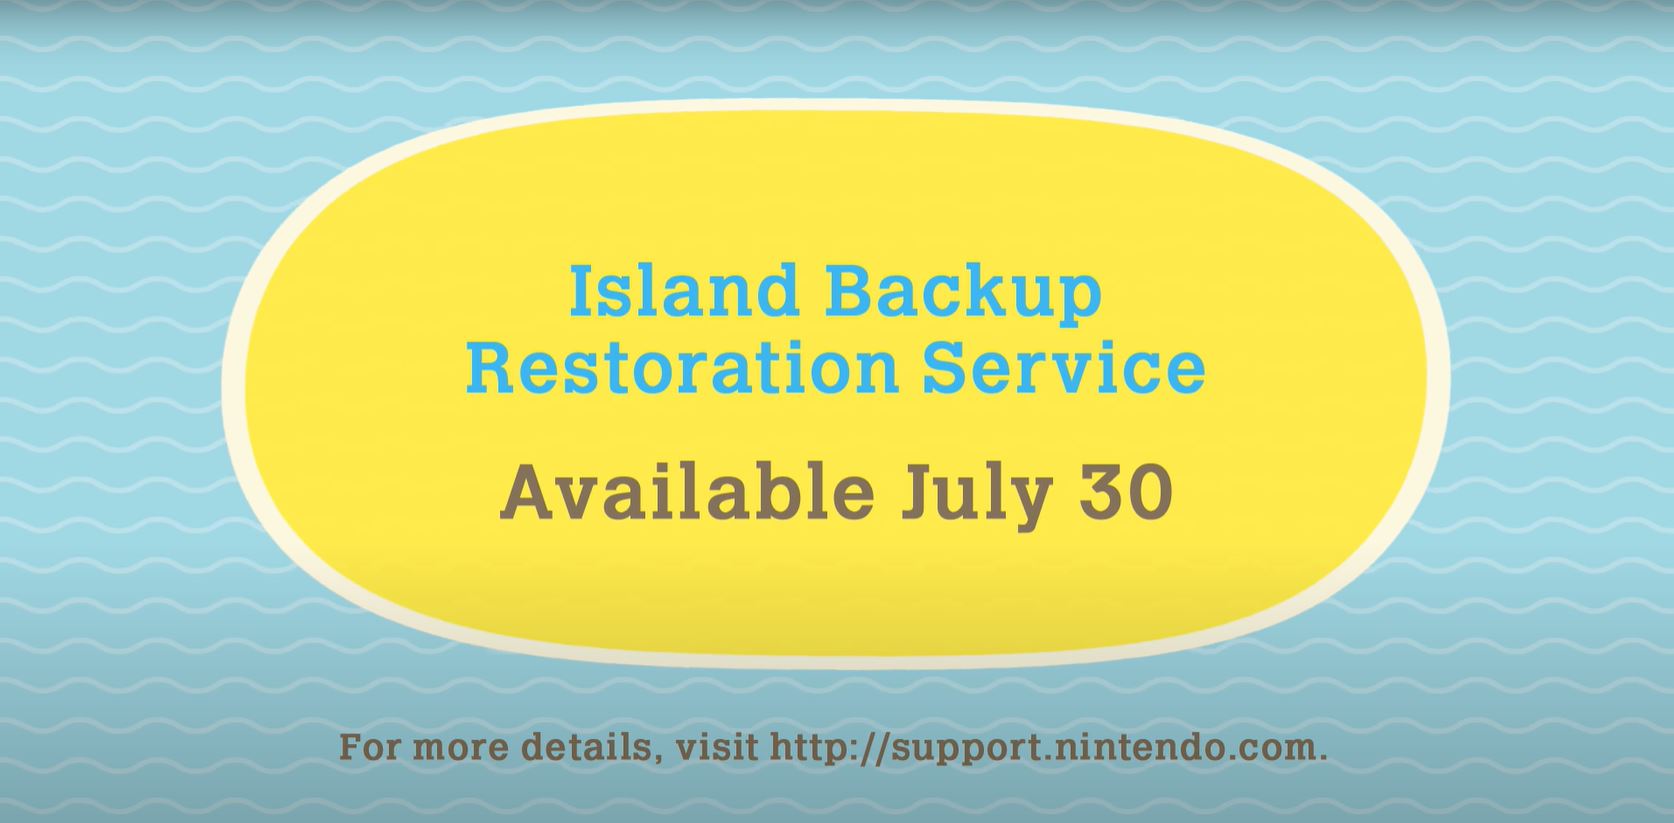 Acnh Island Backup Restoration Service